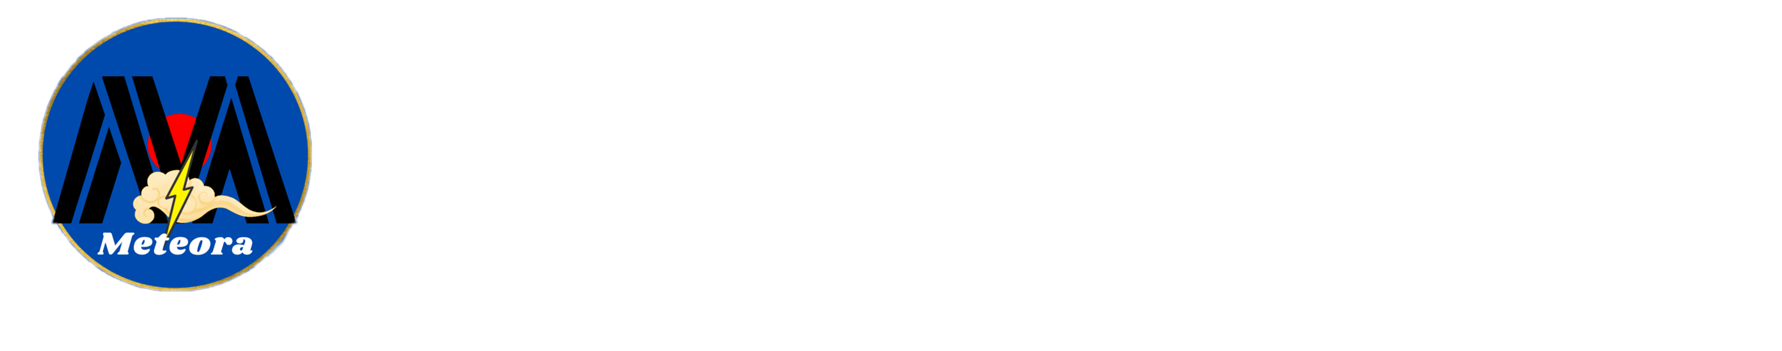 Meteora Weather Service